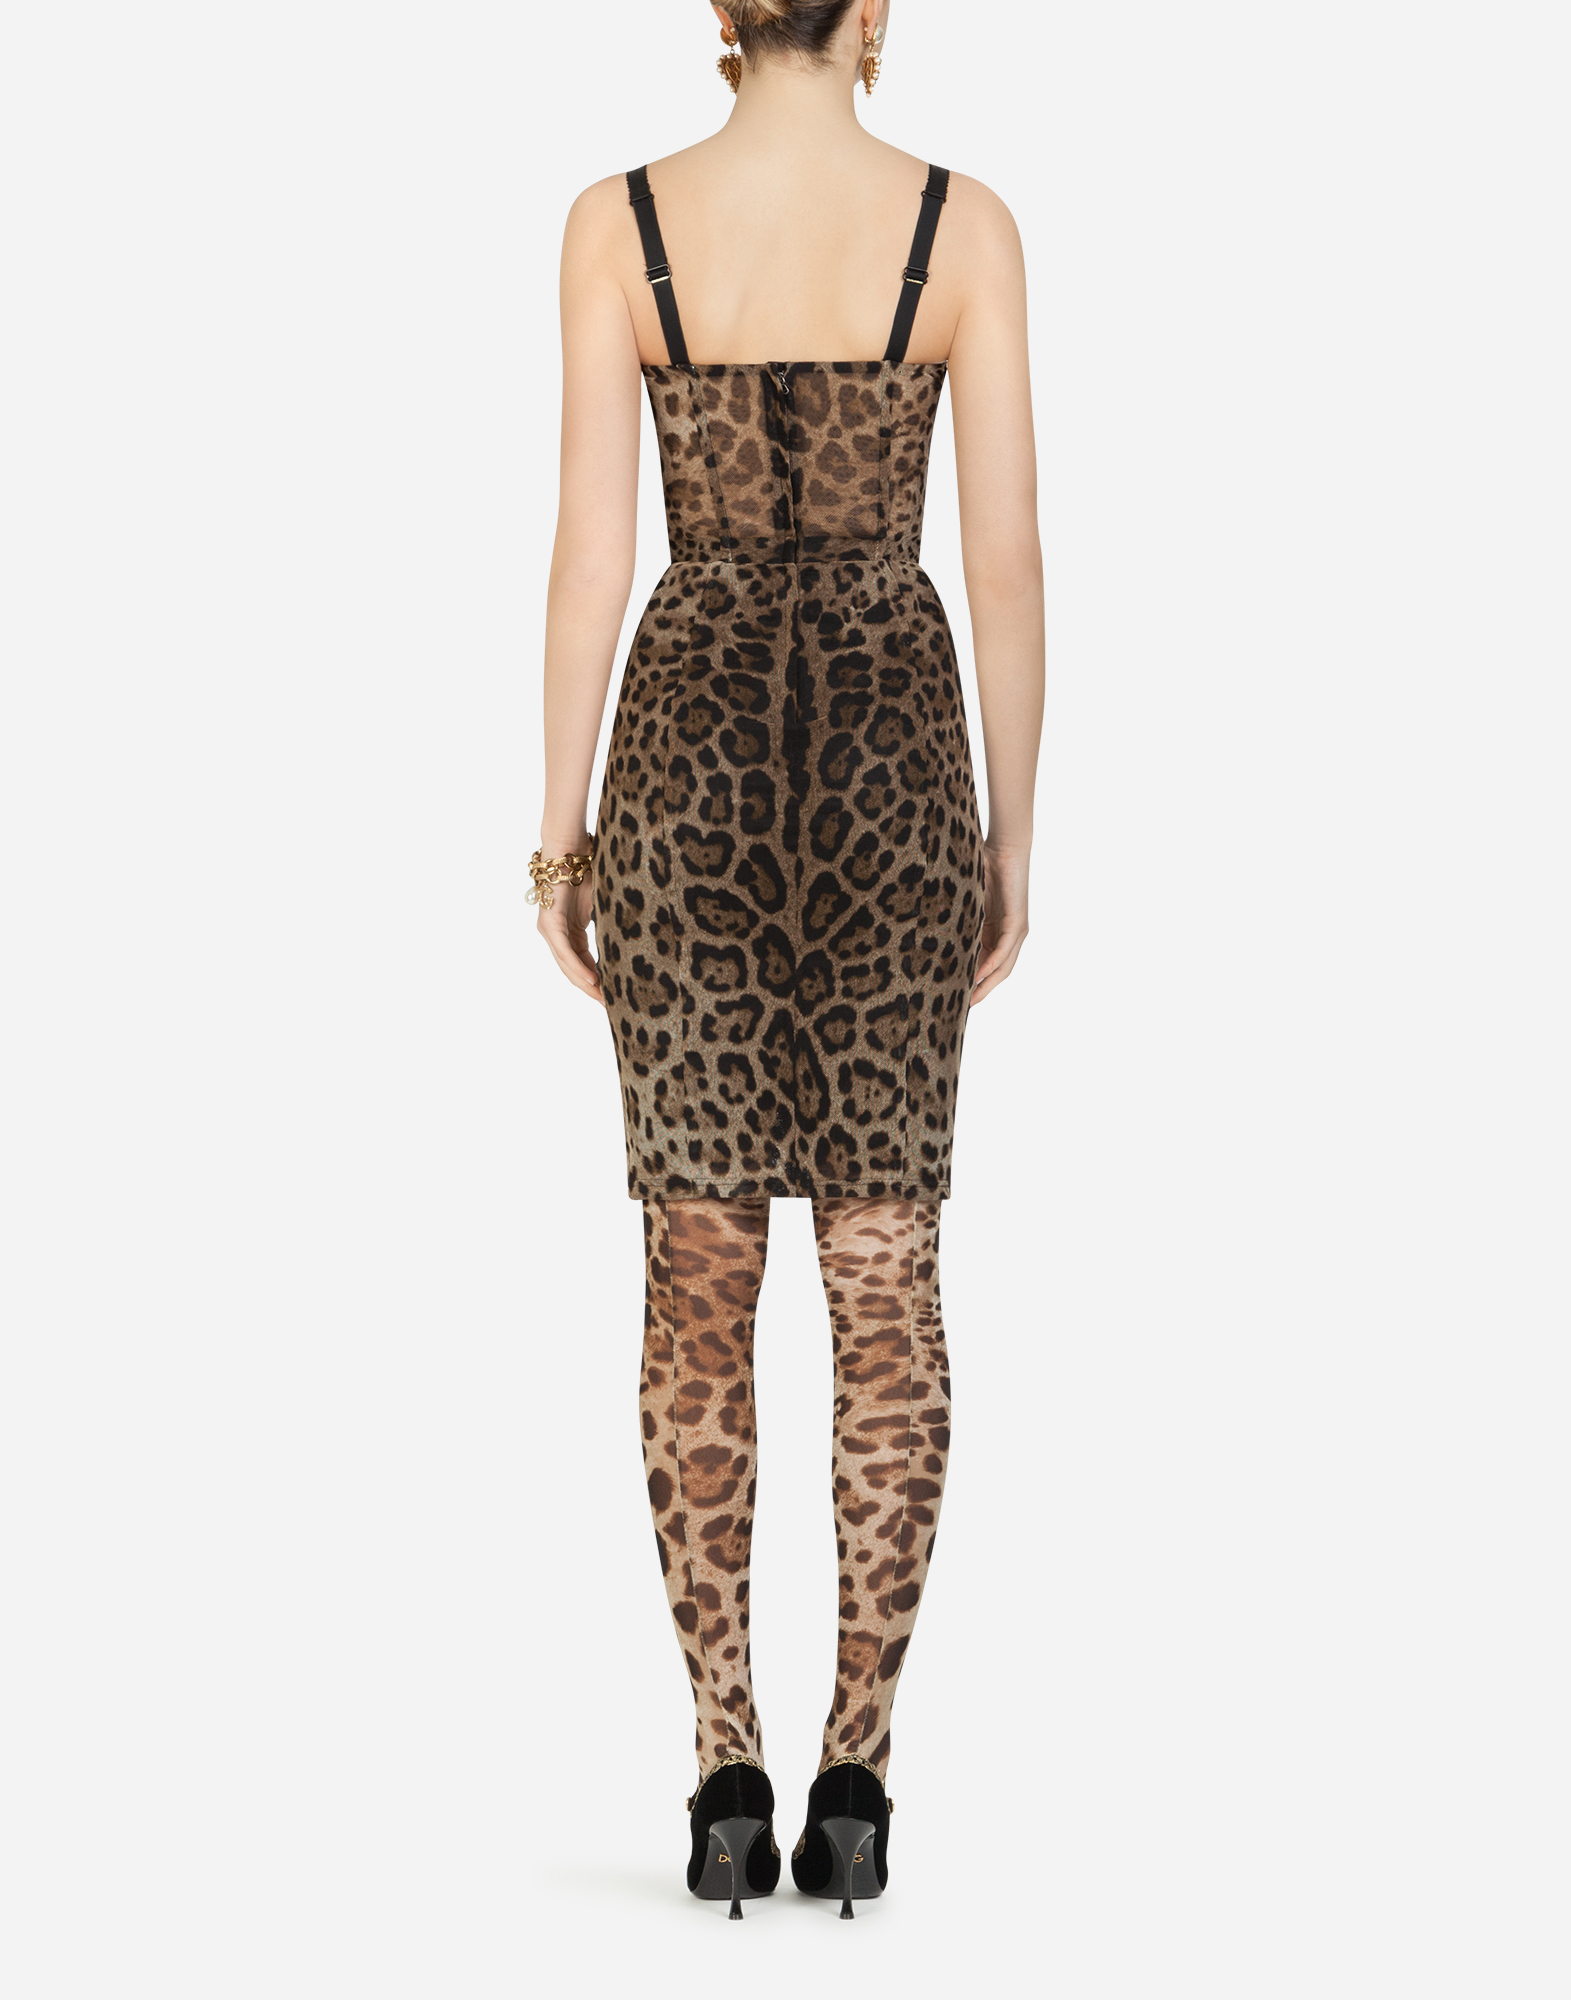 d&g leopard print dress